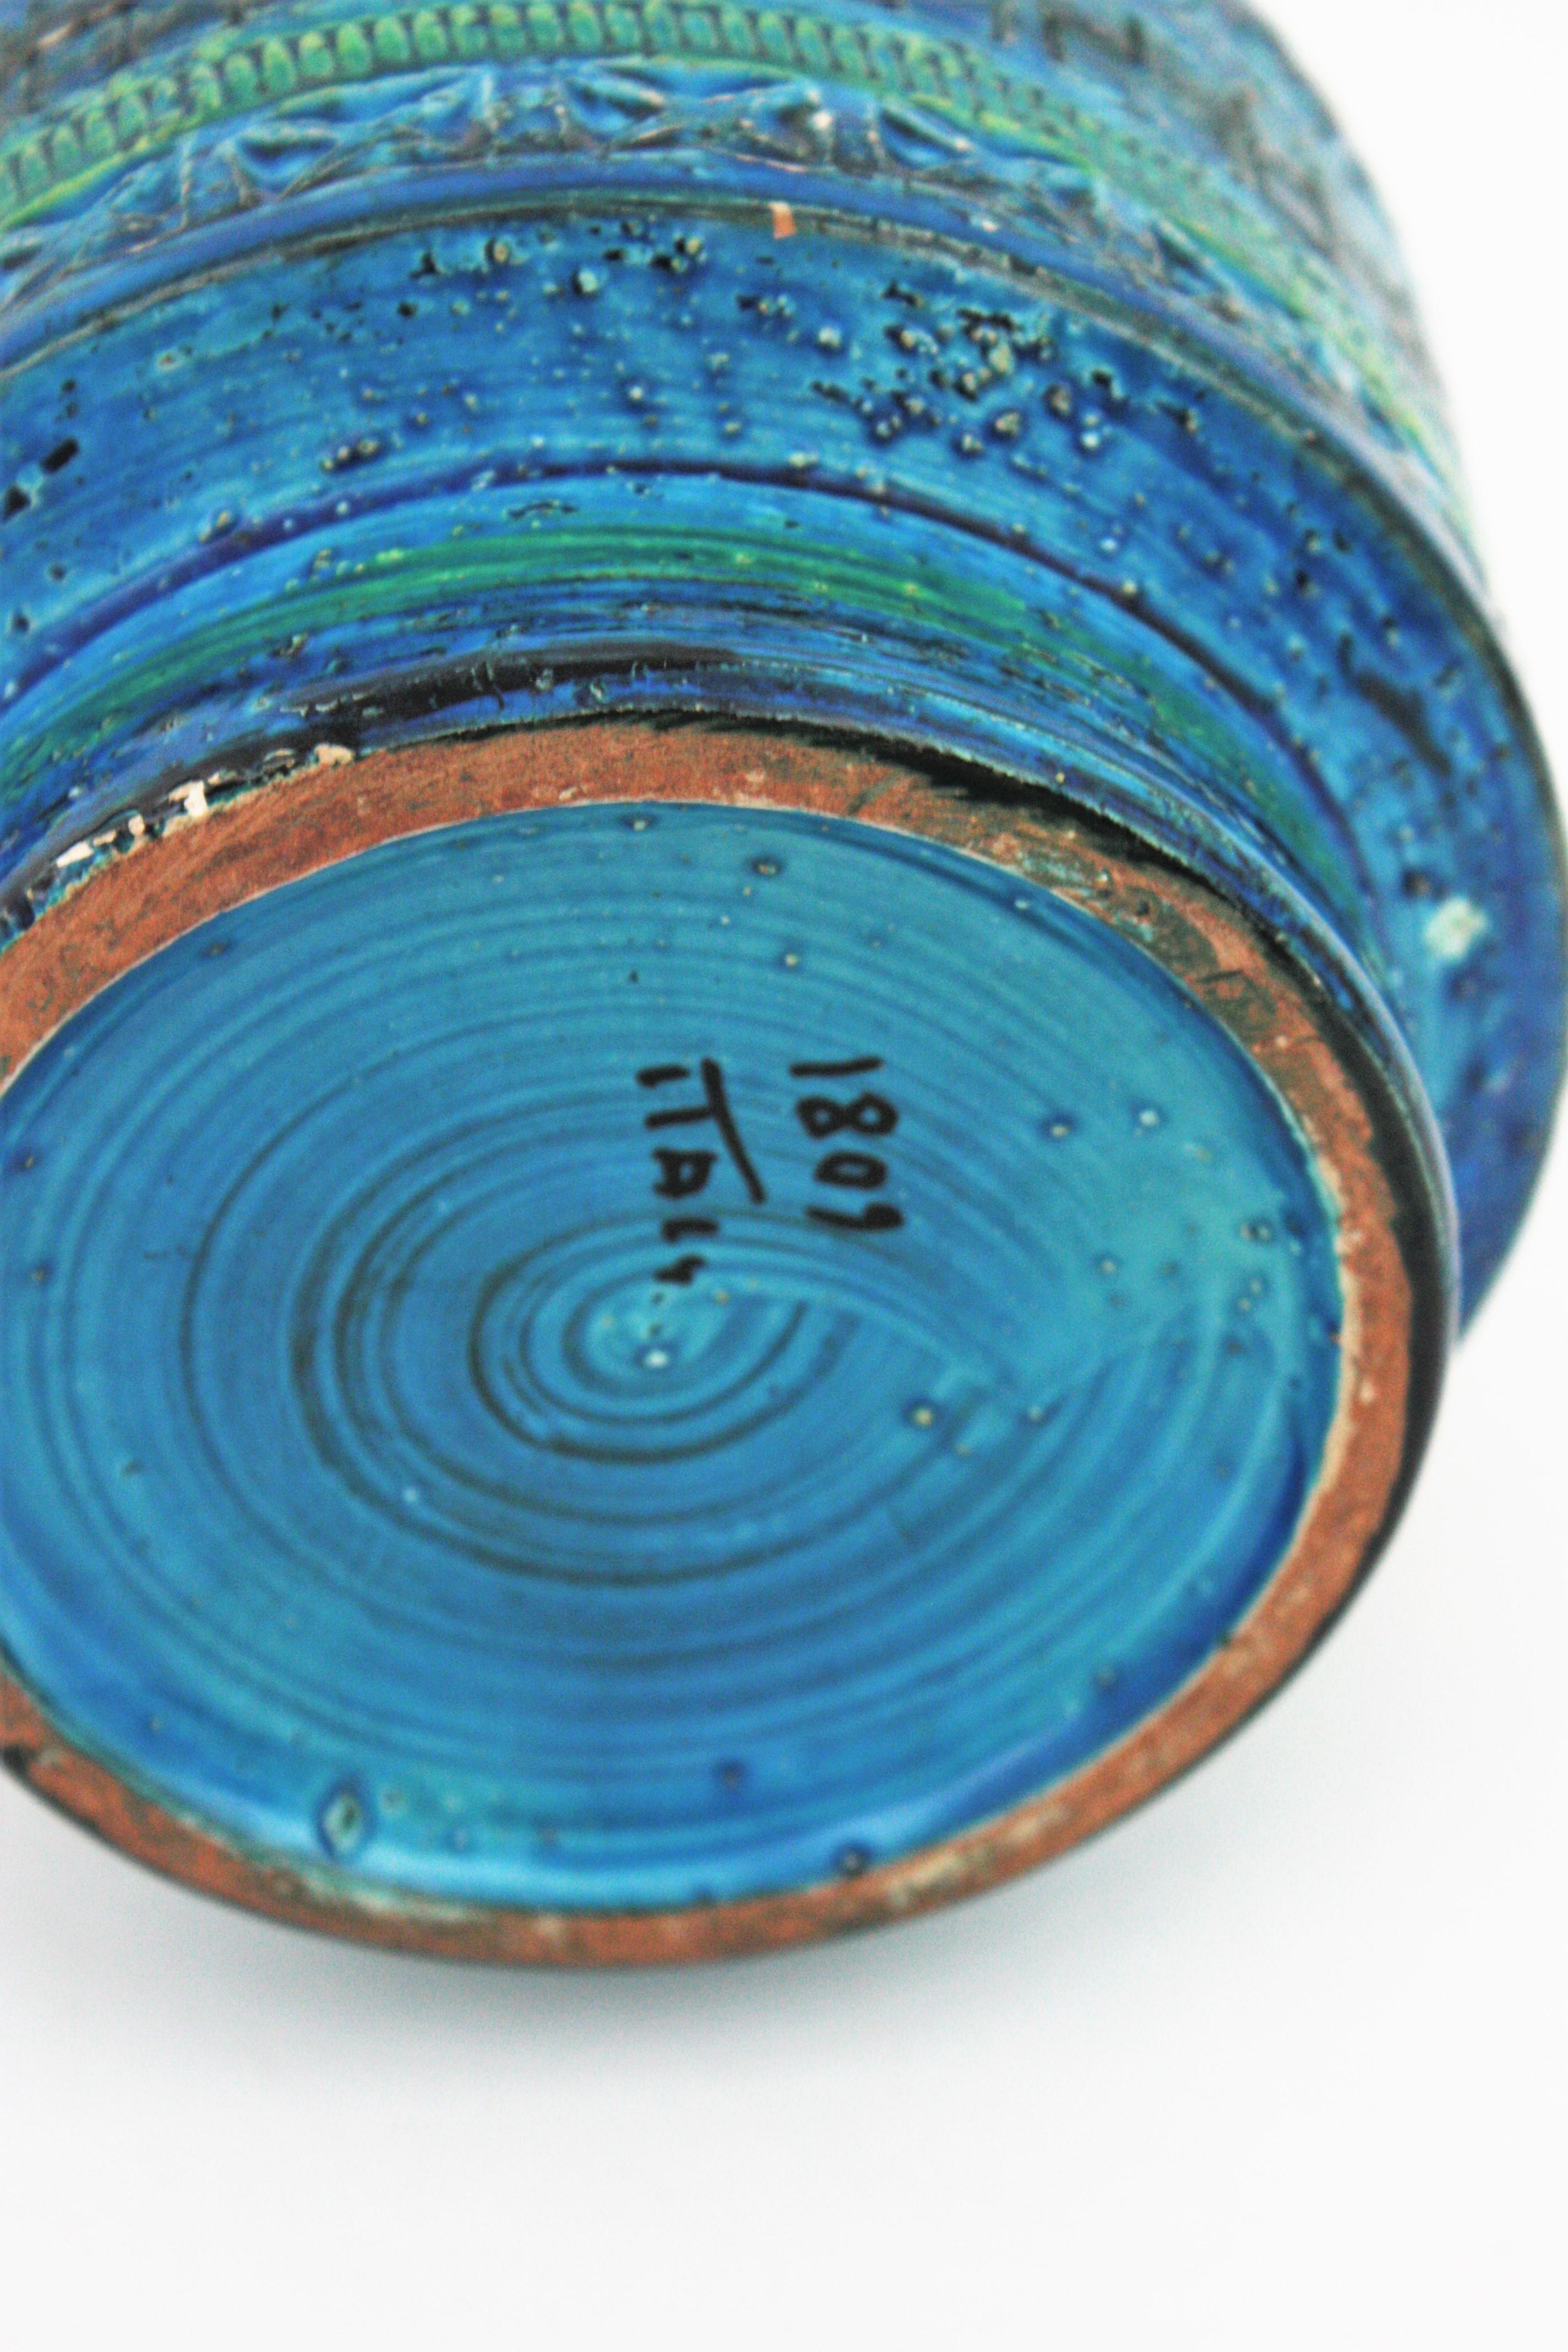 Bitossi Aldo Londi Rimini Blue Ceramic Vase 4